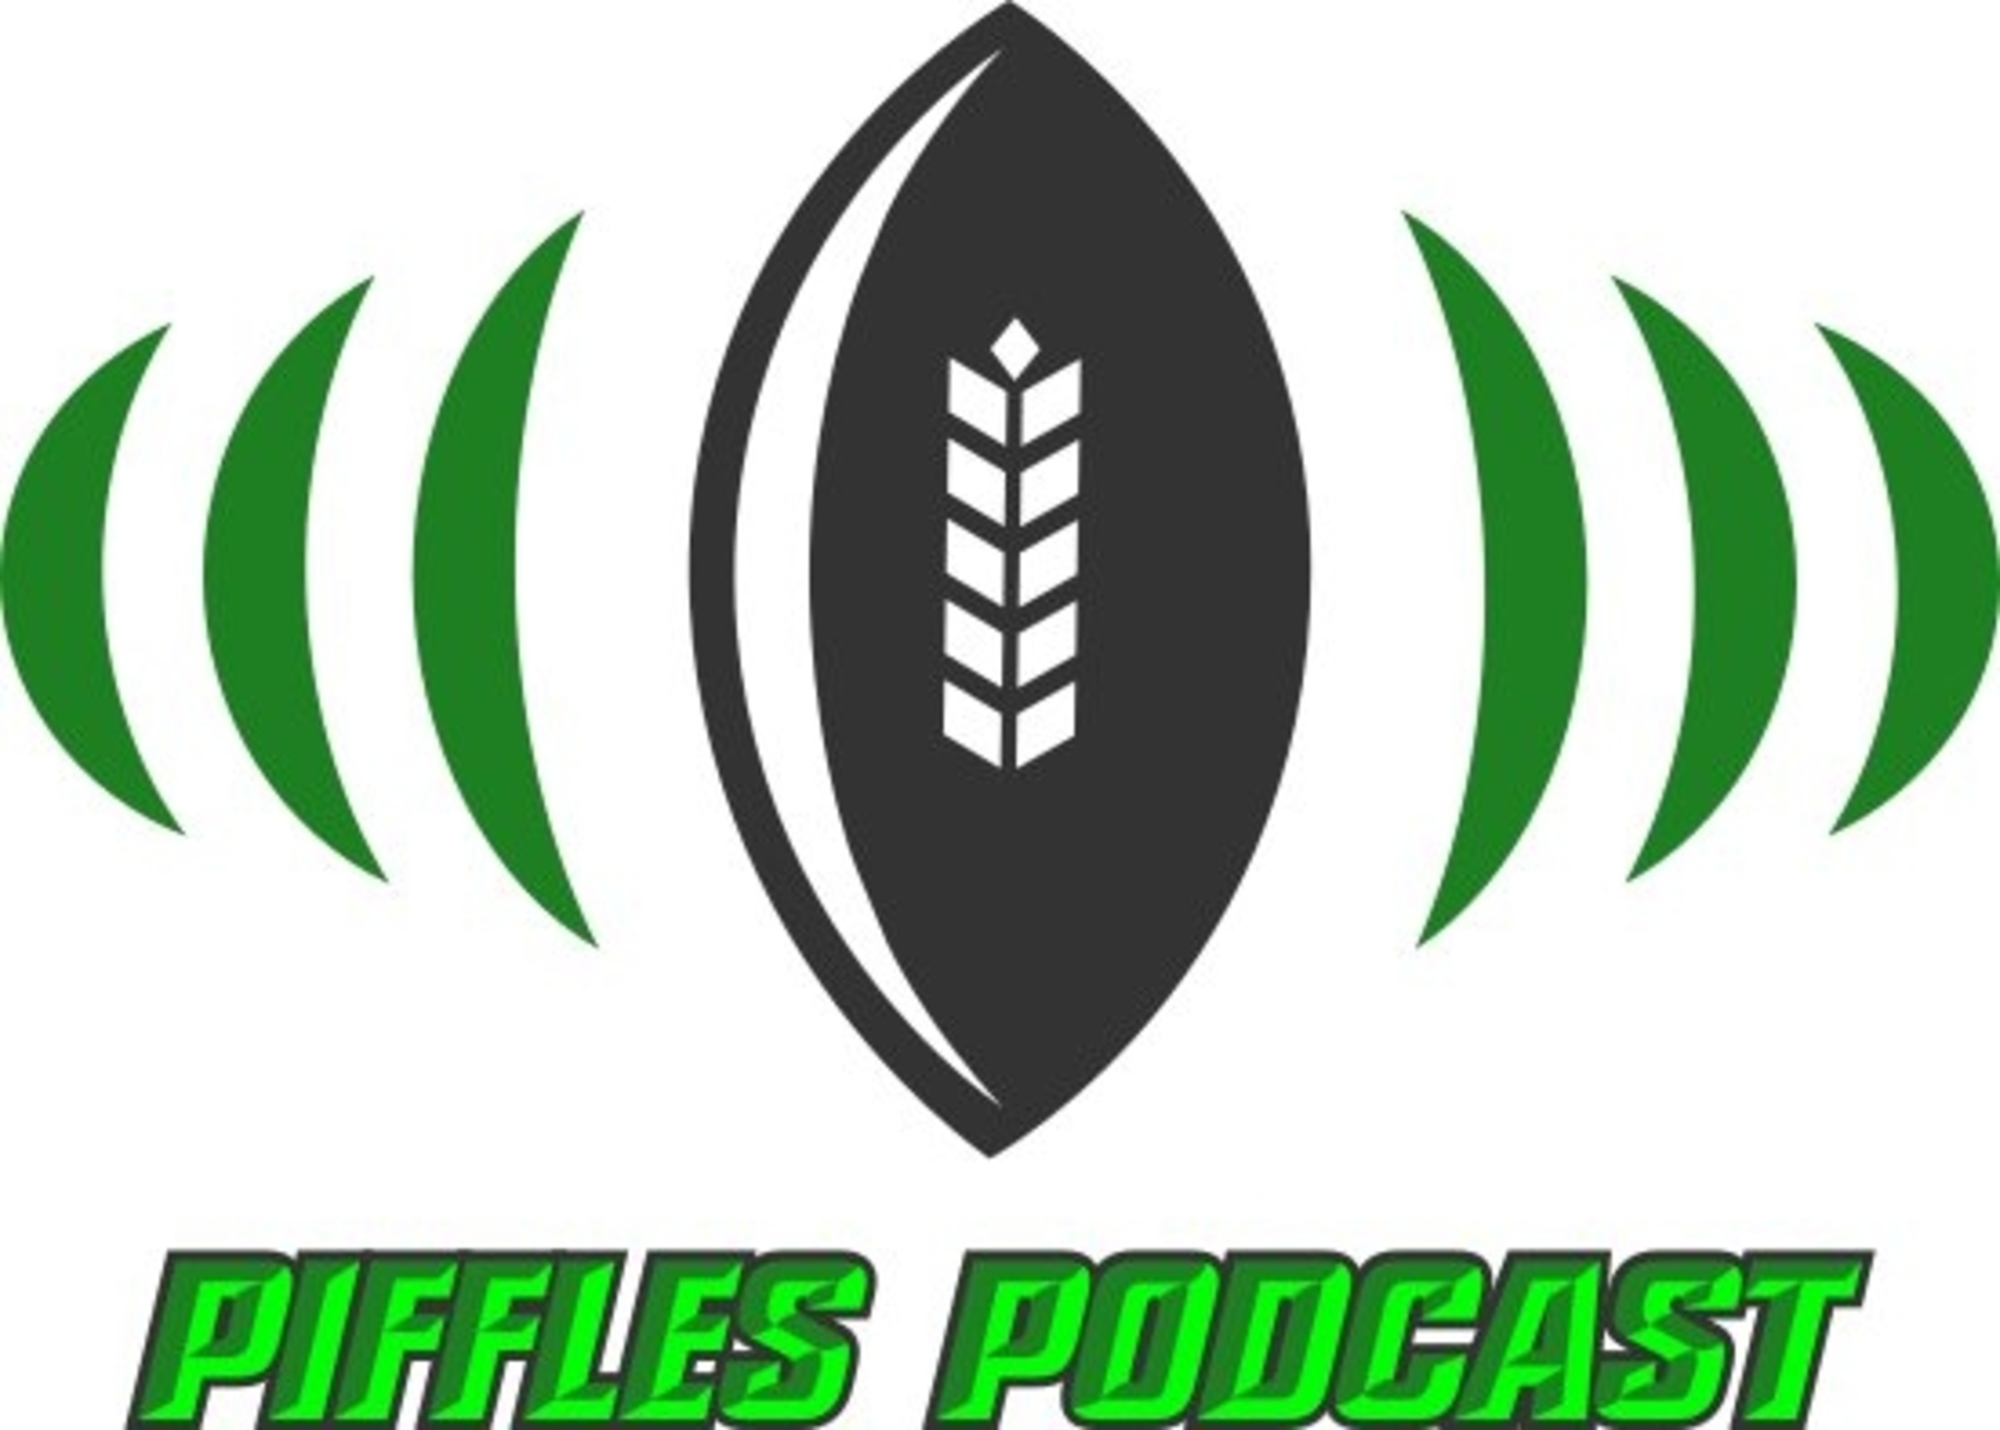 Piffles Podcast Episode 85 - Brett Lauther & Ese Mrabure